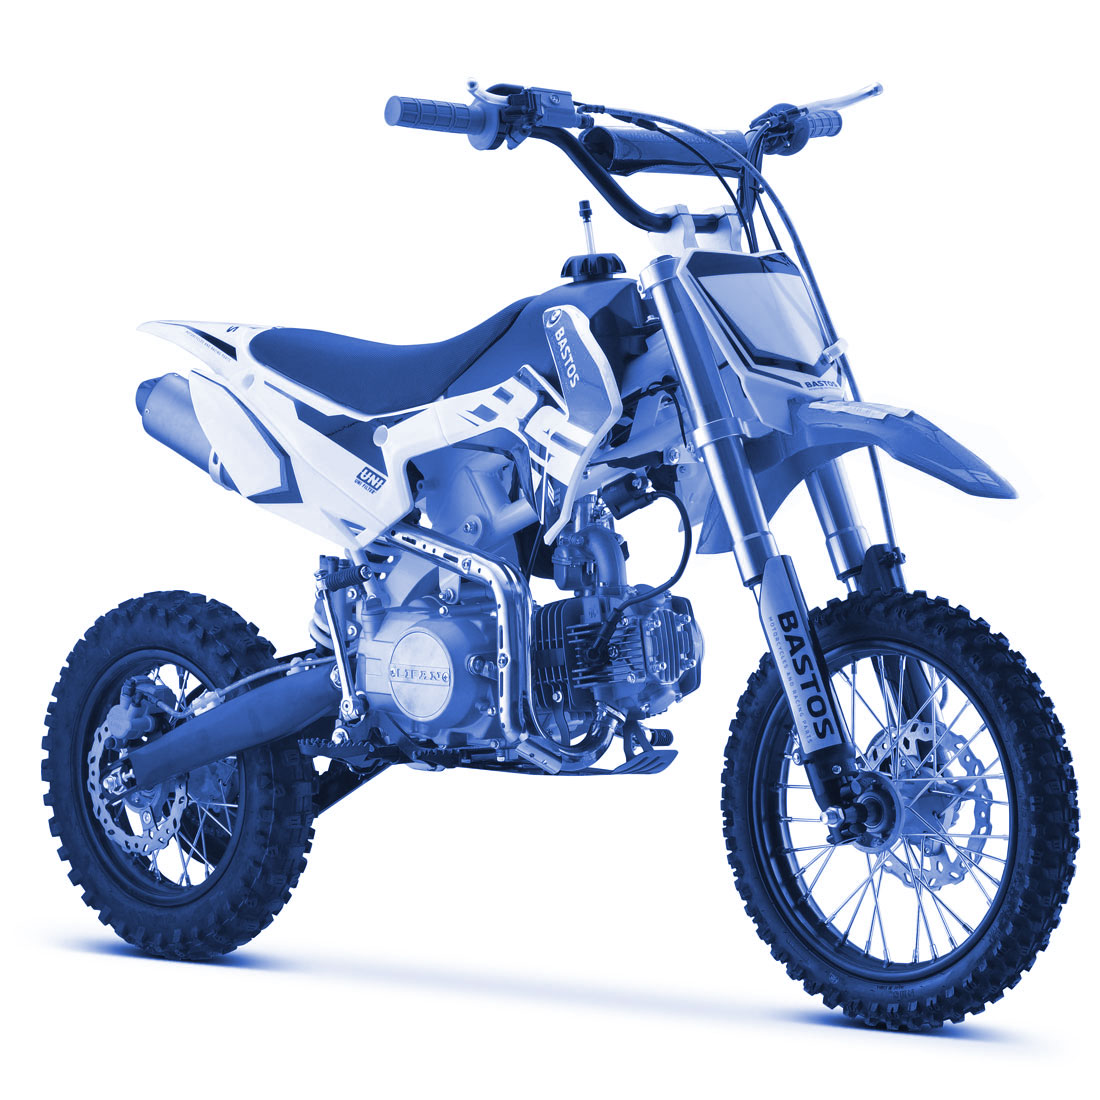 Minimx Bastos bike bleue 125cm3 BS